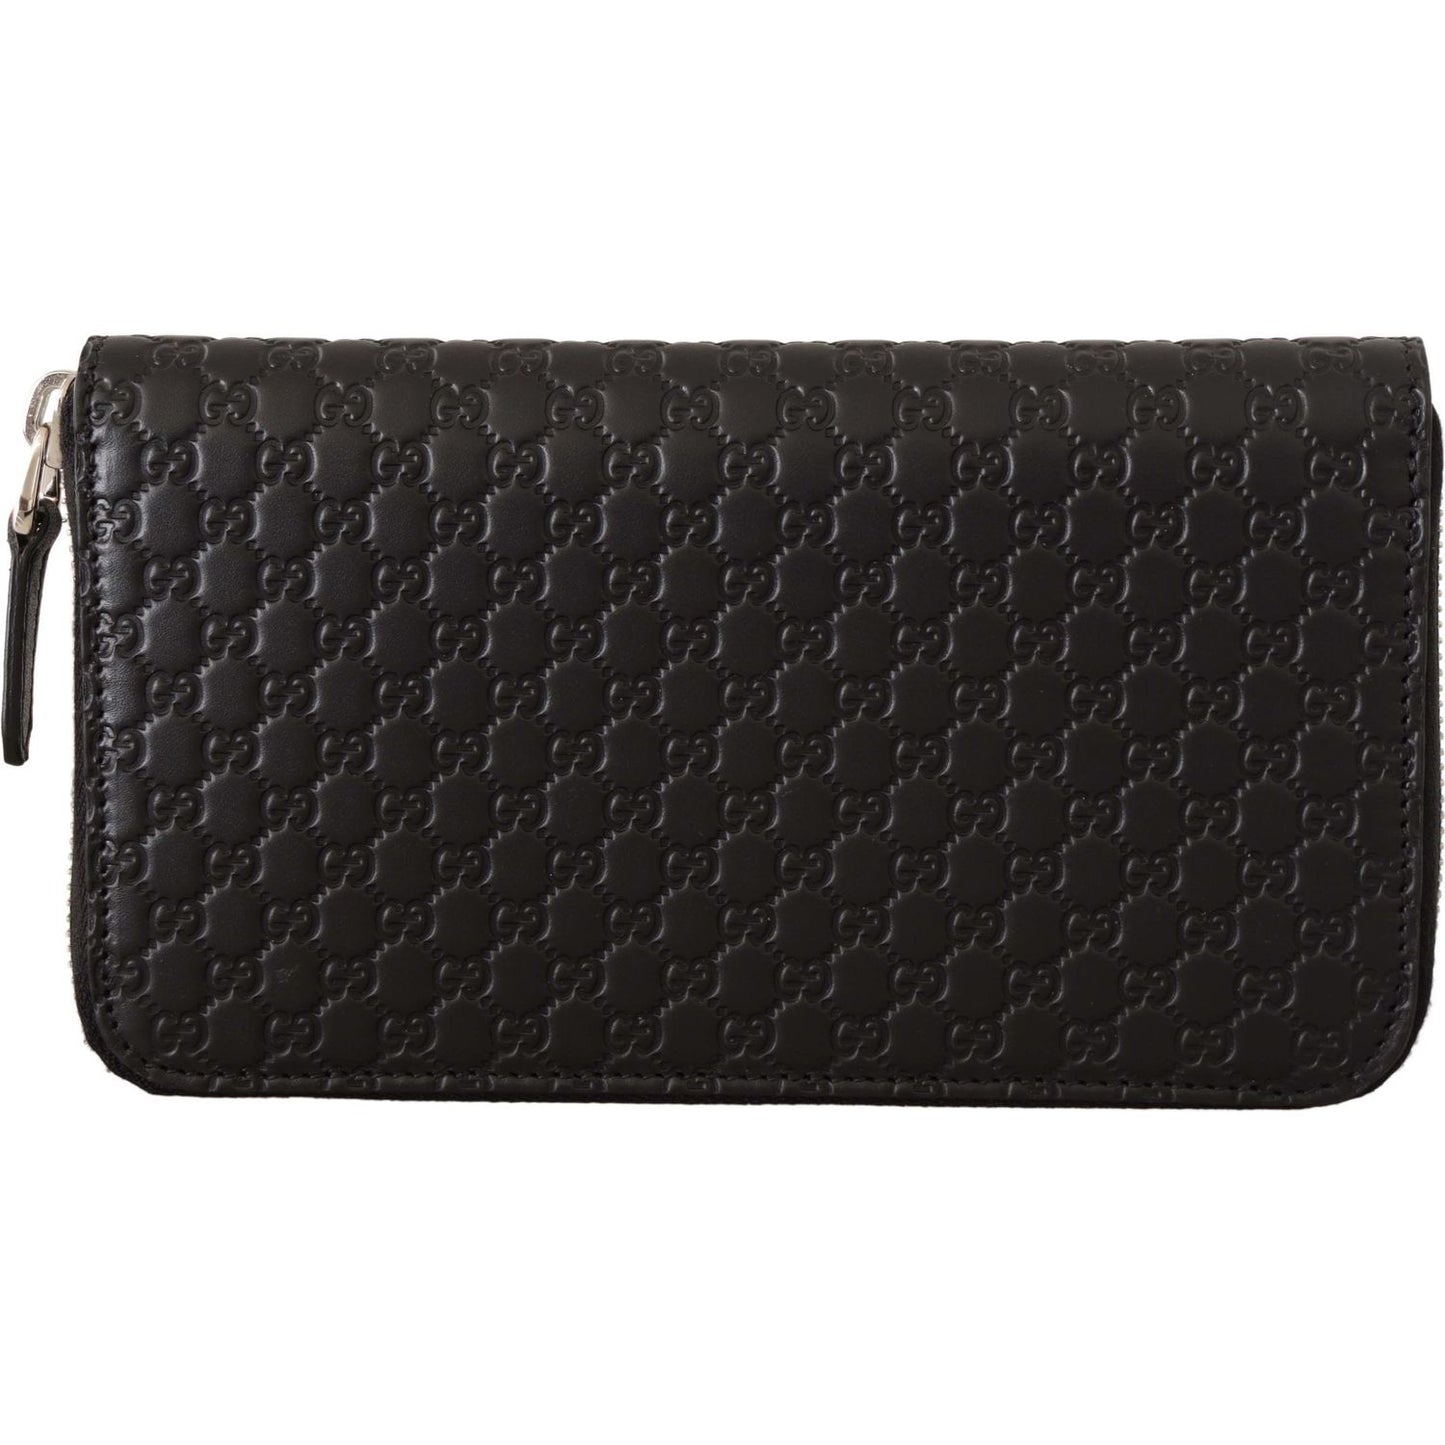 Gucci Elegant Black Leather Zip-Around Wallet black-wallet-microguccissima-leather-zipper-wallet IMG_7652-scaled-f6b43994-771.jpg